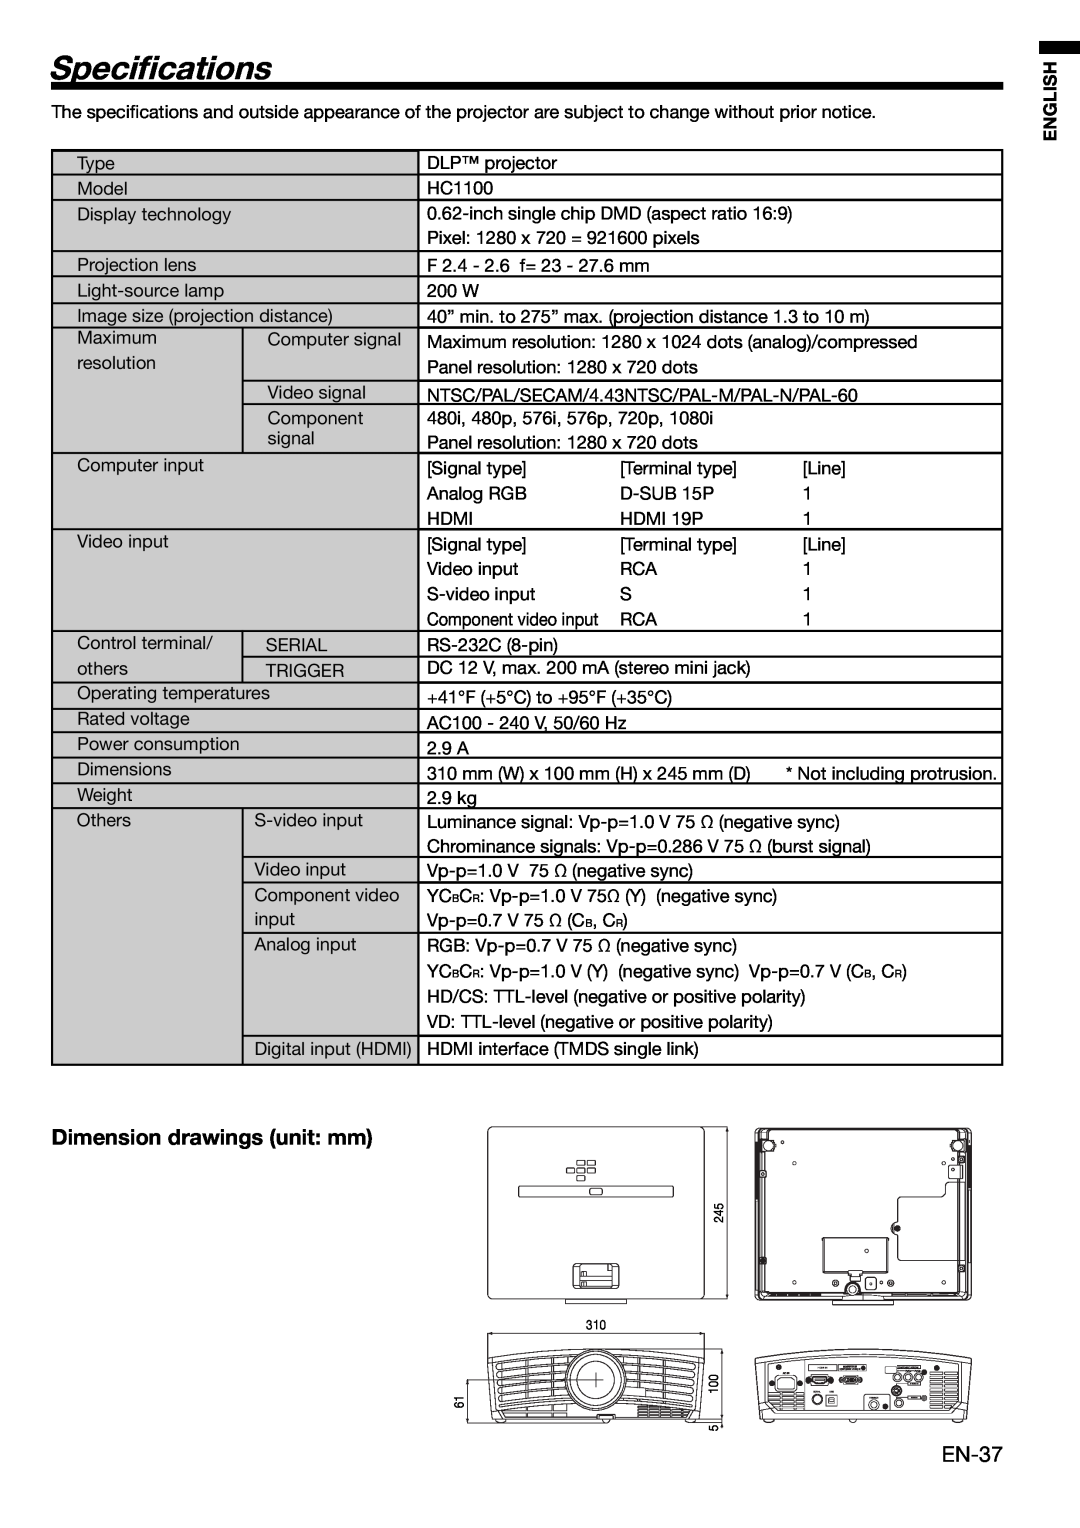 Mitsubishi HC1100 user manual Speciﬁcations, Dimension drawings unit mm, English 